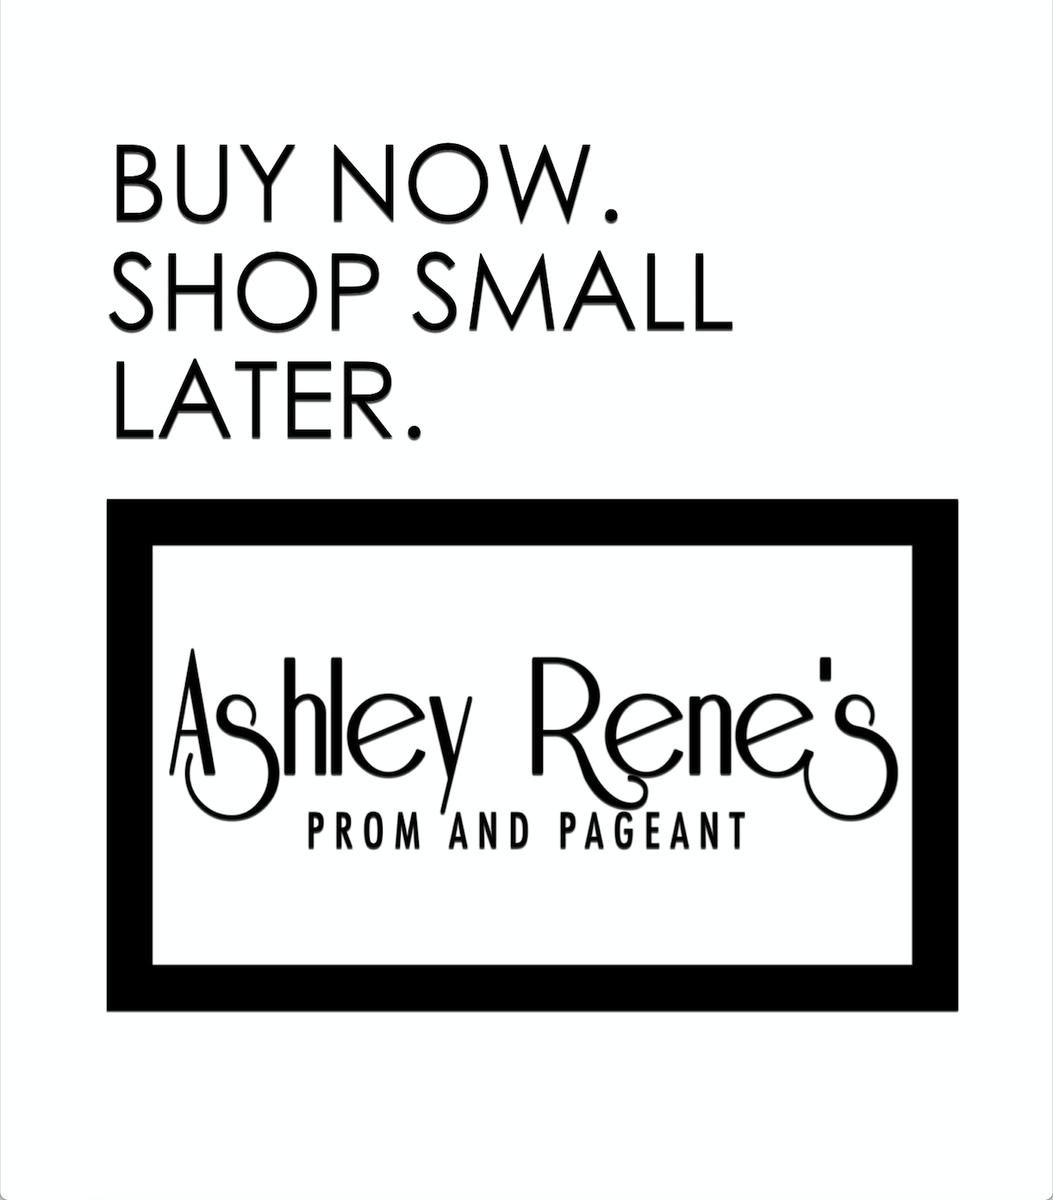 Ashley Rene's 